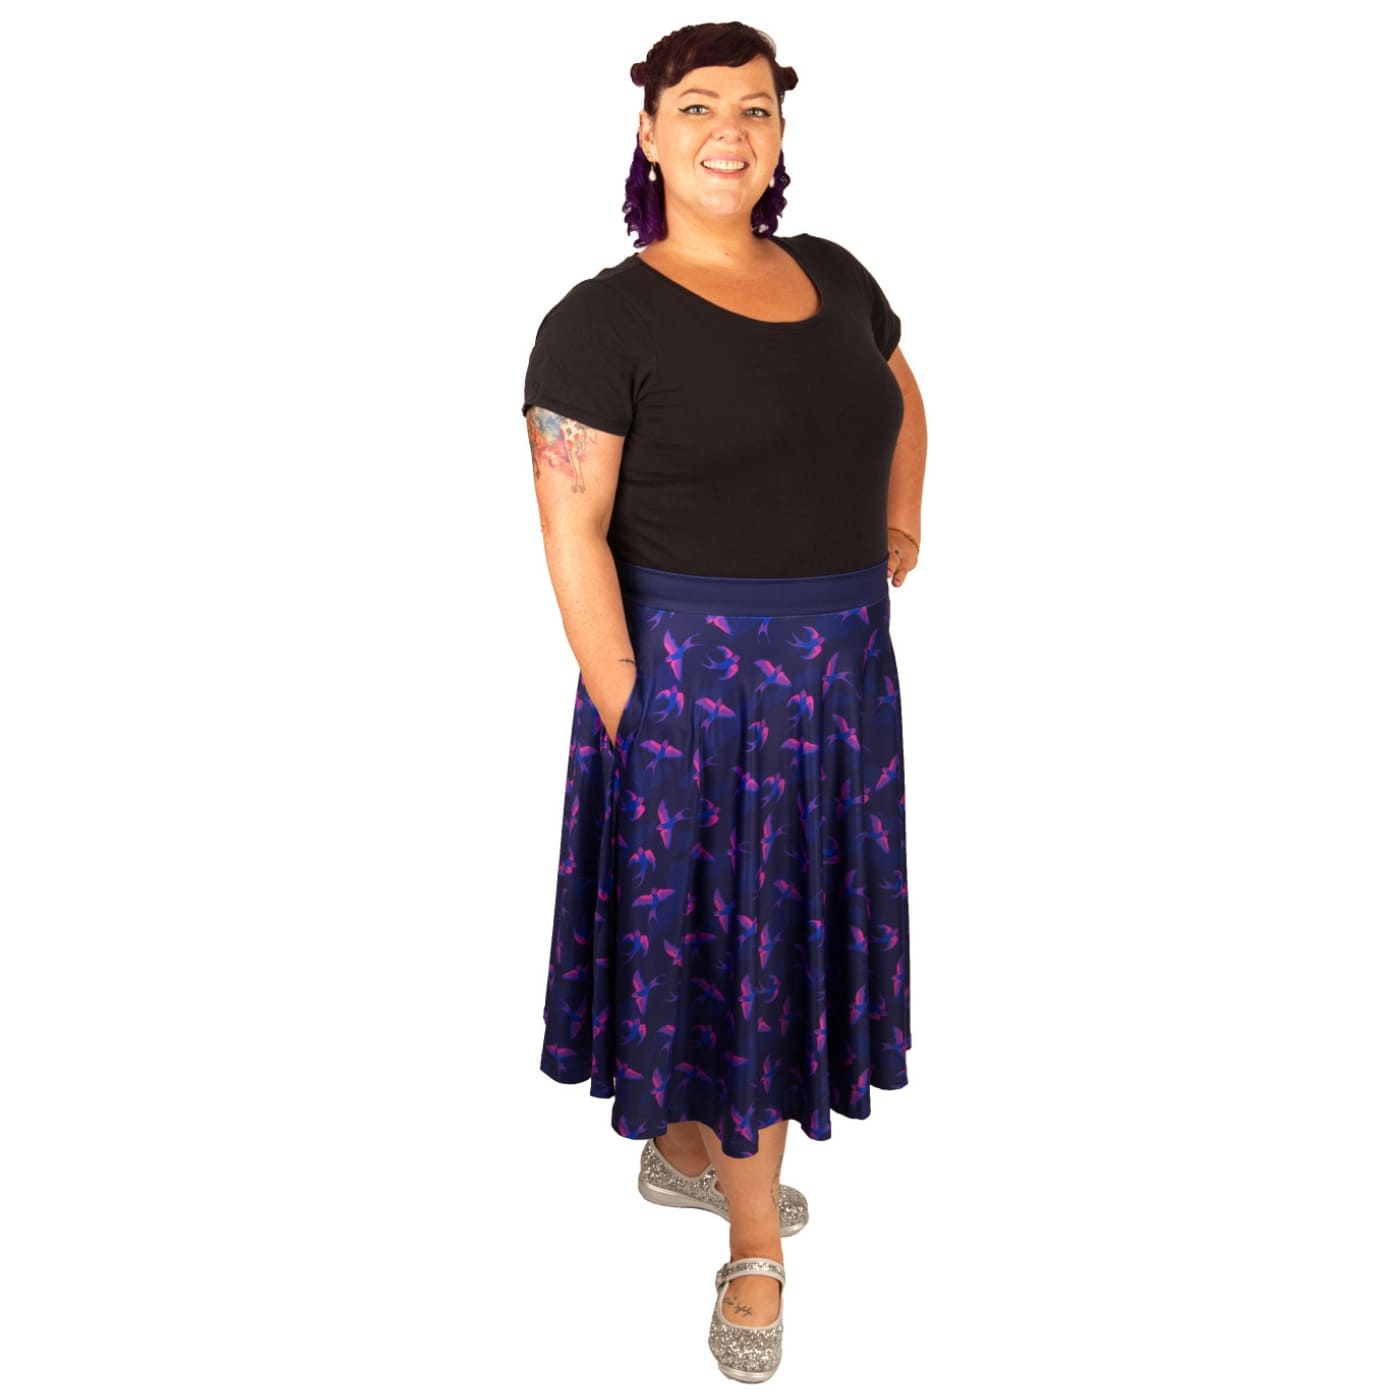 Swoop Swishy Skirt by RainbowsAndFairies.com.au (Swallows - Birds - Purple - Blue - Vintage Inspired - Kitsch - Skirt With Pockets - Circle Skirt) - SKU: CL_SWISH_SWOOP_ORG - Pic-08